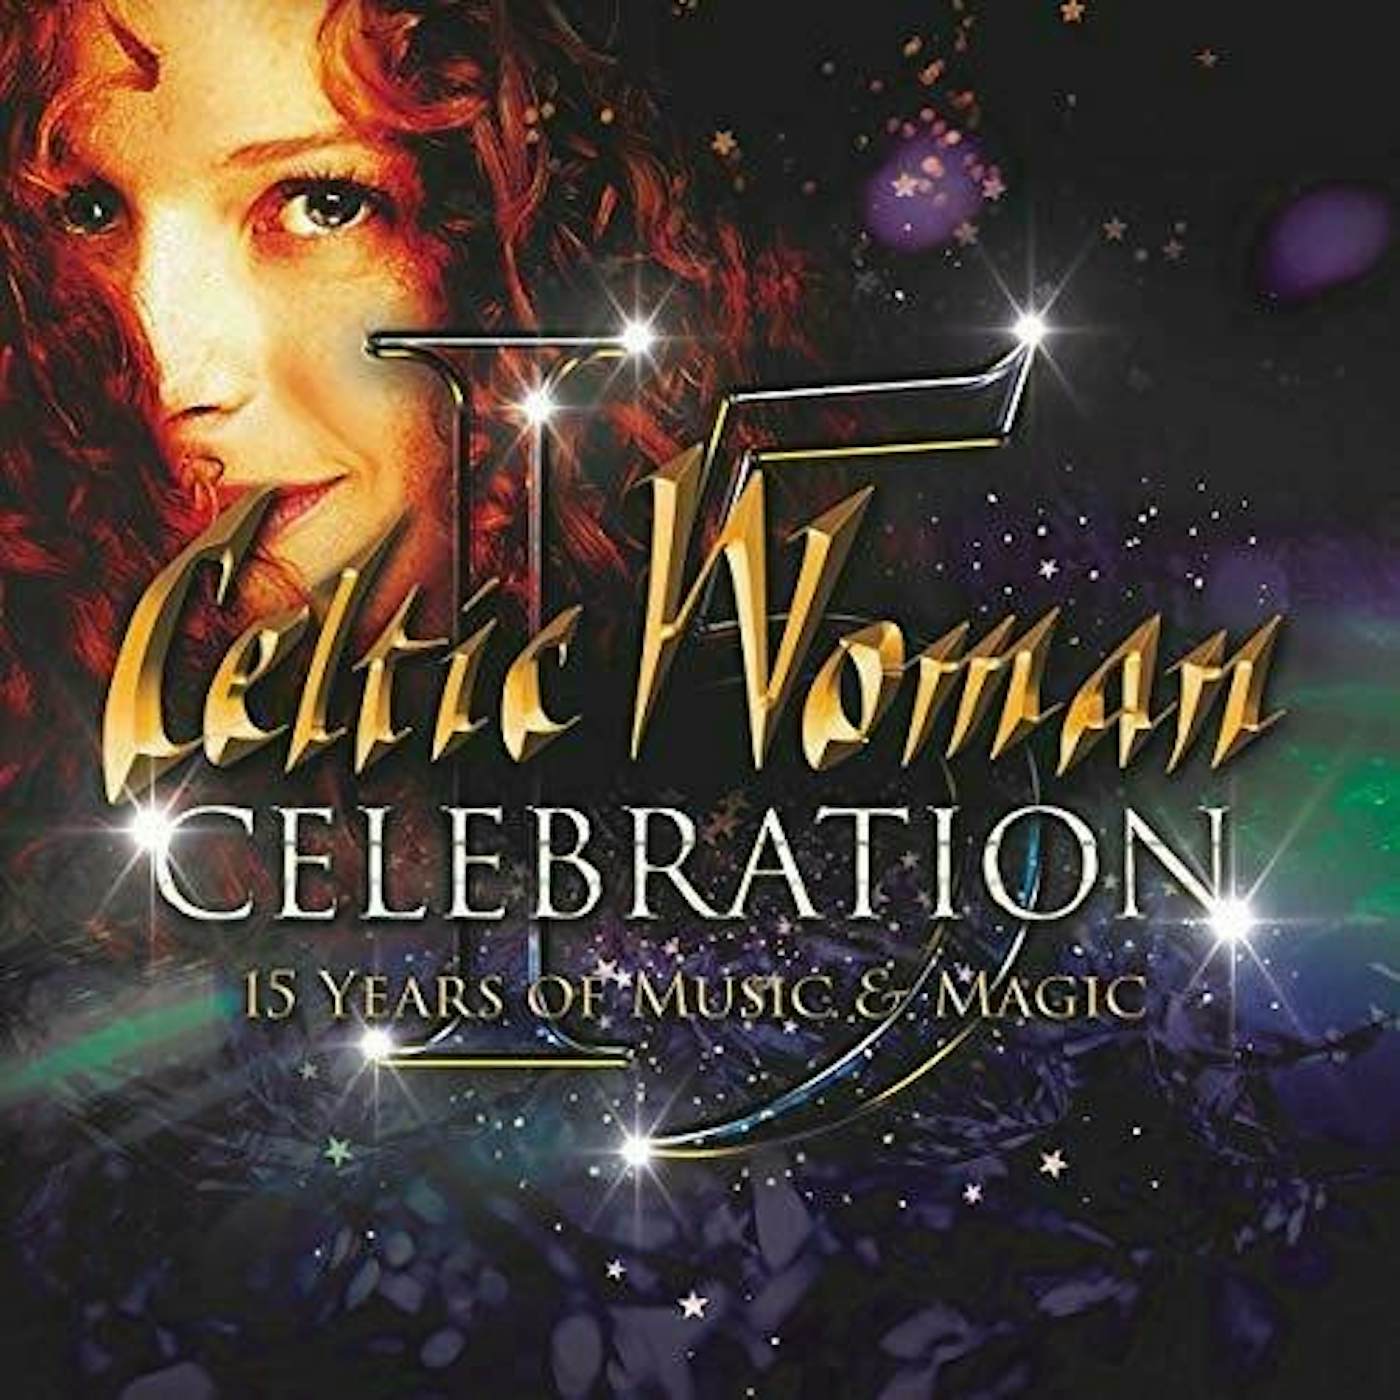 Celtic Woman CELEBRATION (15 YEARS OF MUSIC & MAGIC) CD